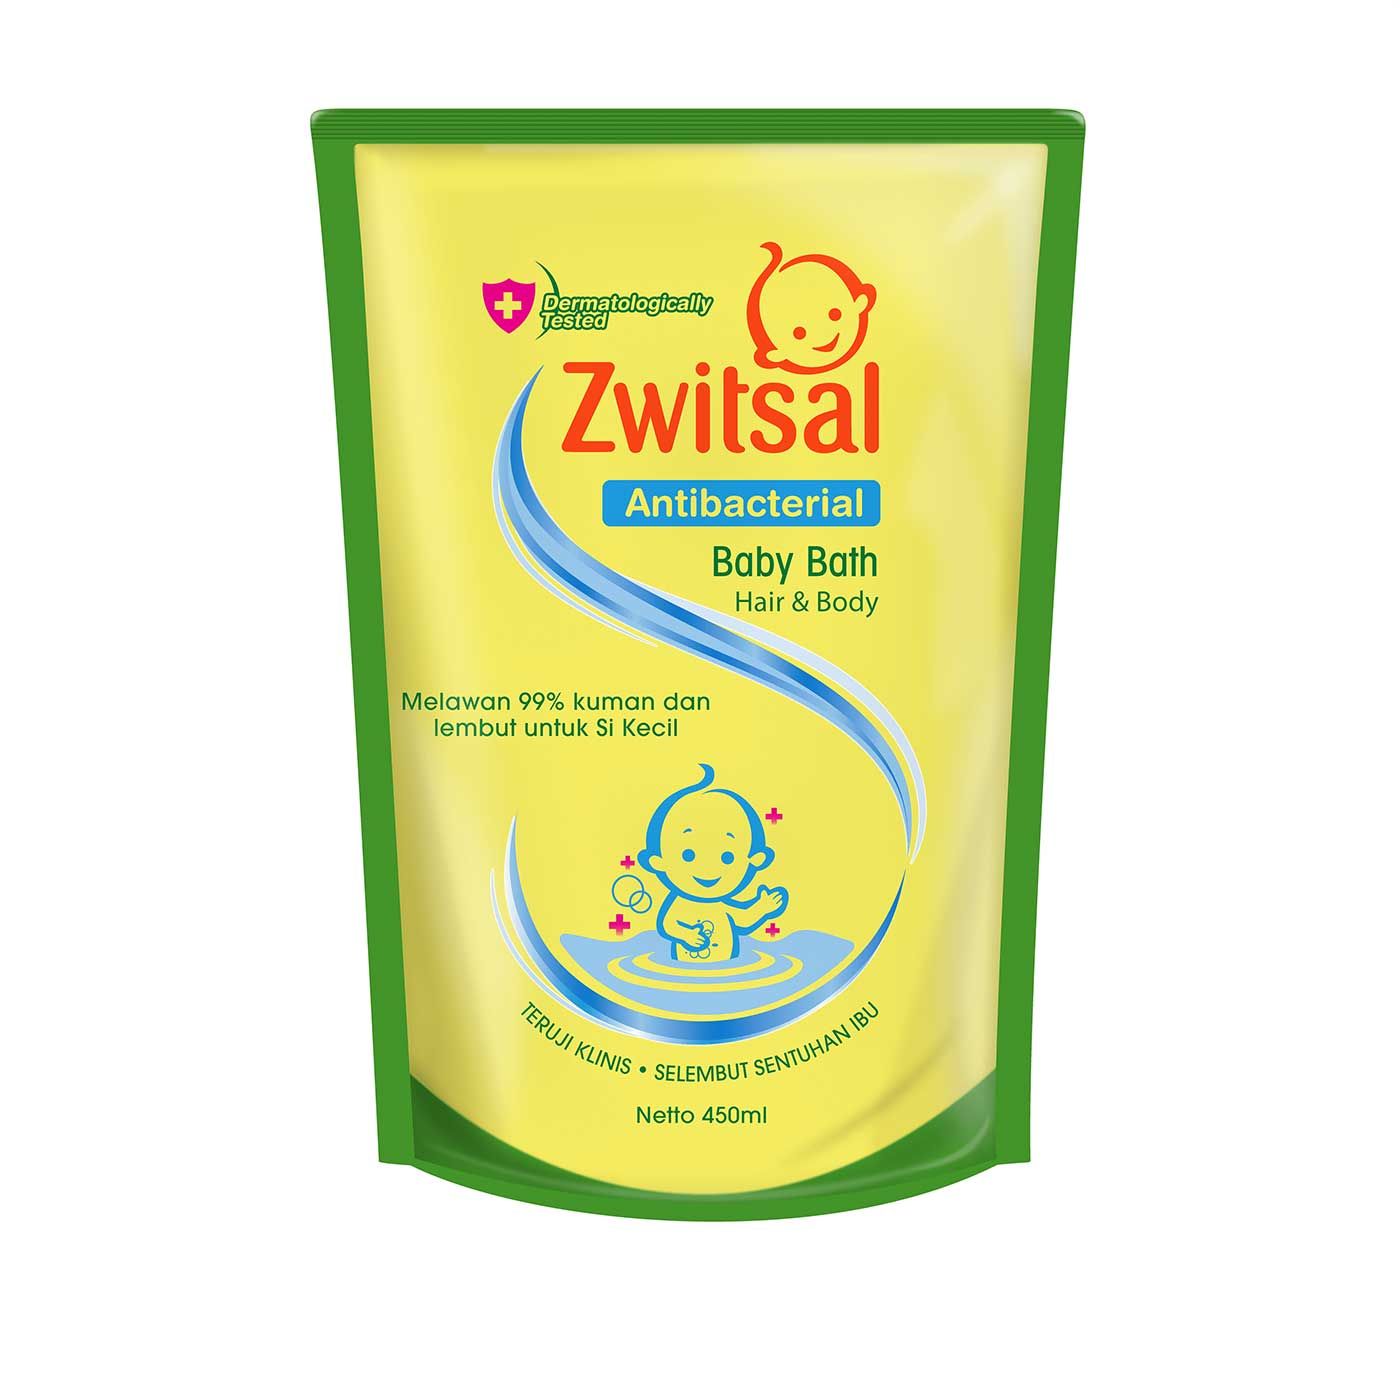 Zwitsal Baby Bath Hair & Body Antibacterial 450ml - 2